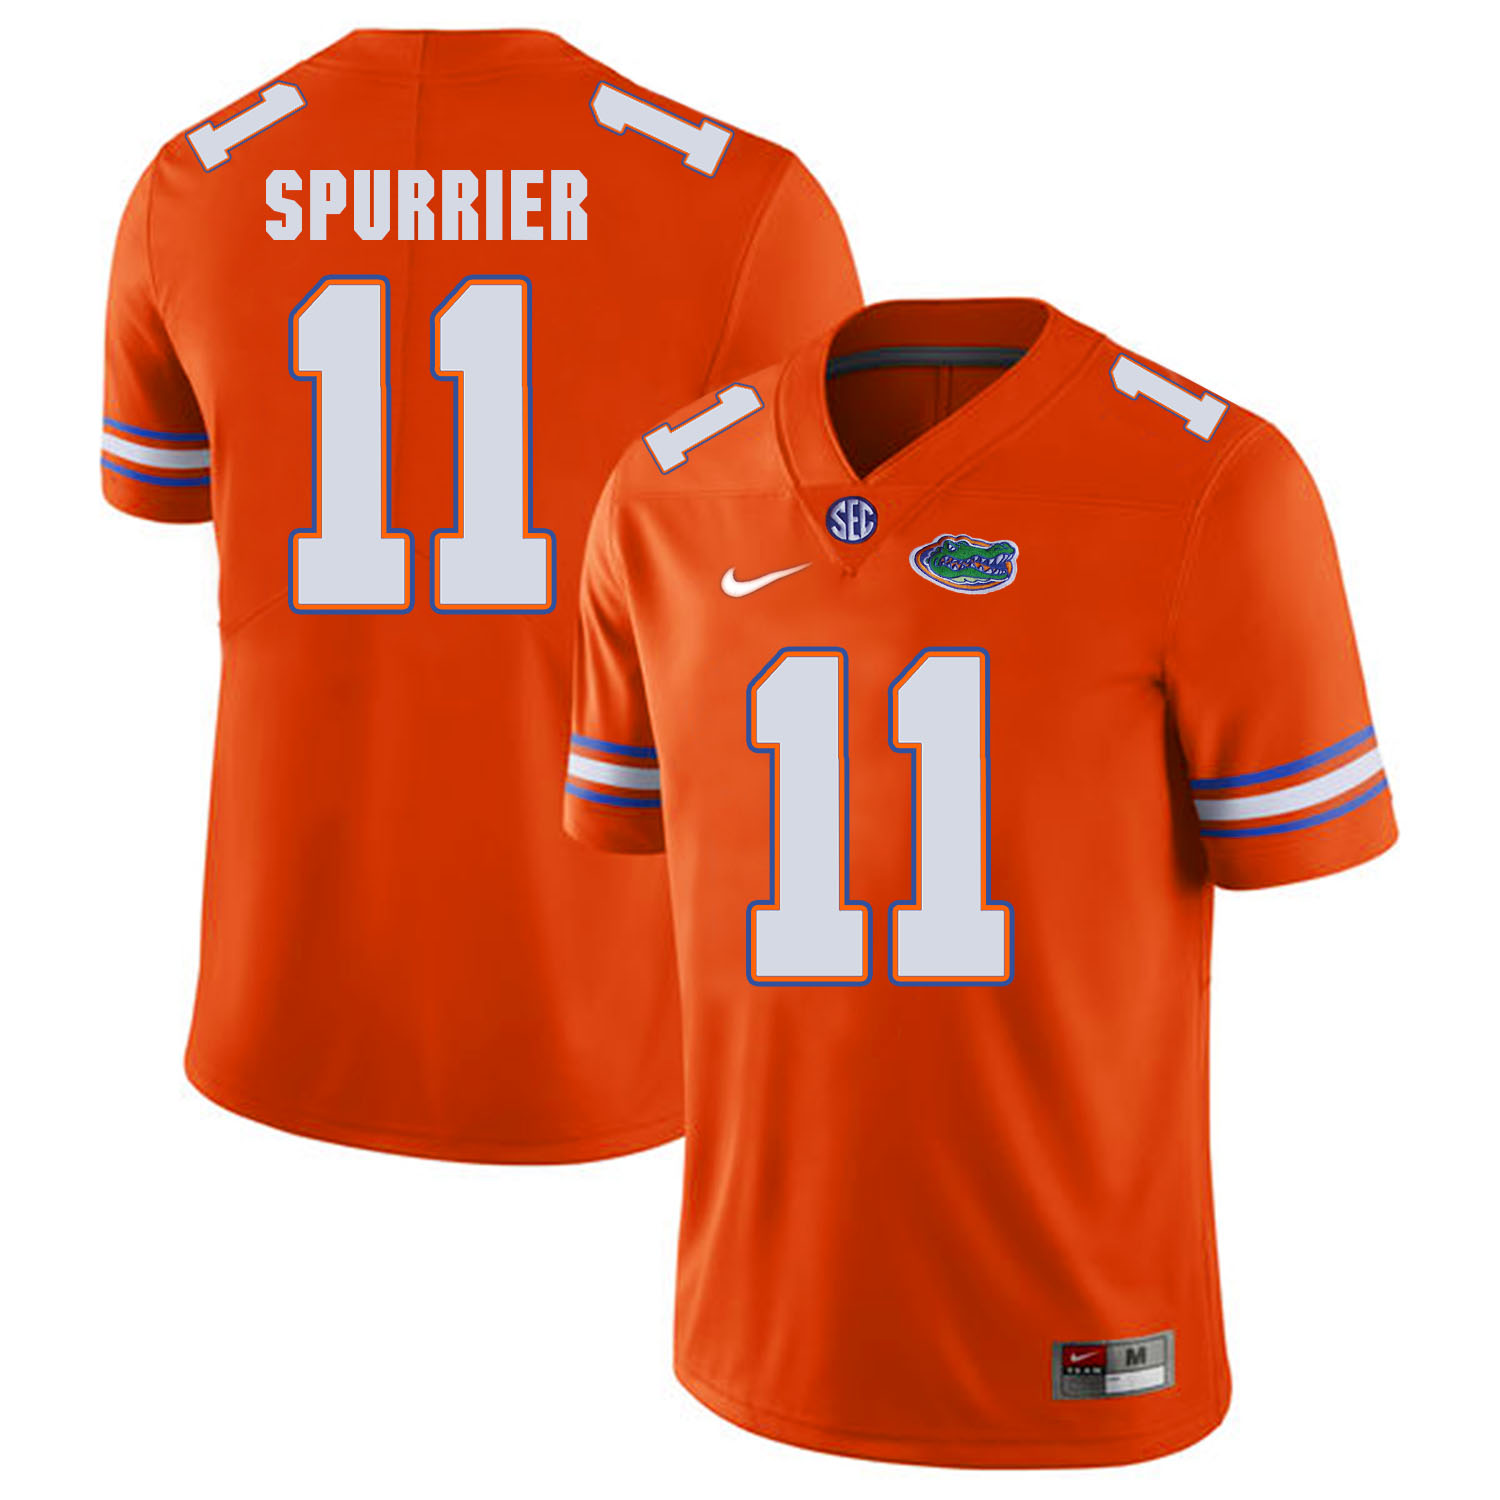 Florida Gators 11 Steve Spurrier Orange College Football Jersey